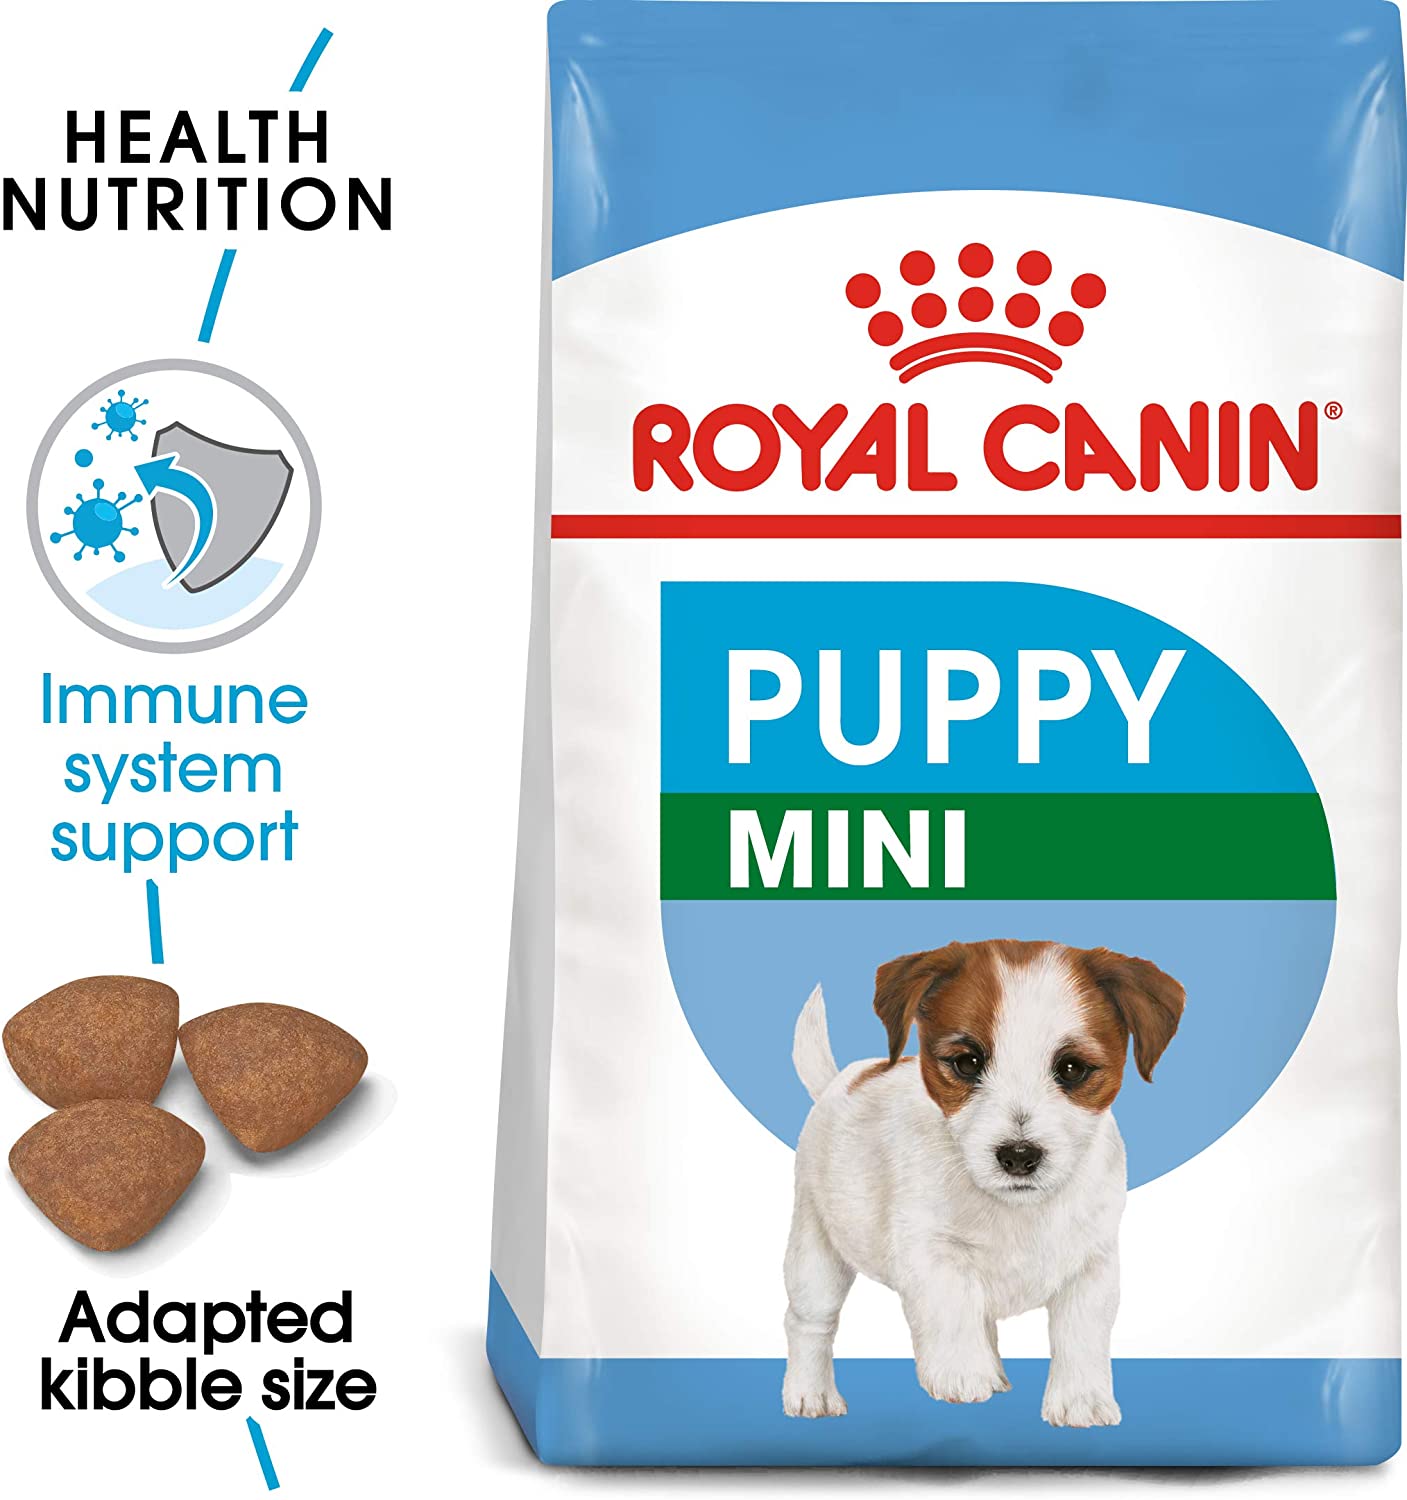 Royal Canin Puppy 2-10 Months Mini Dog Food